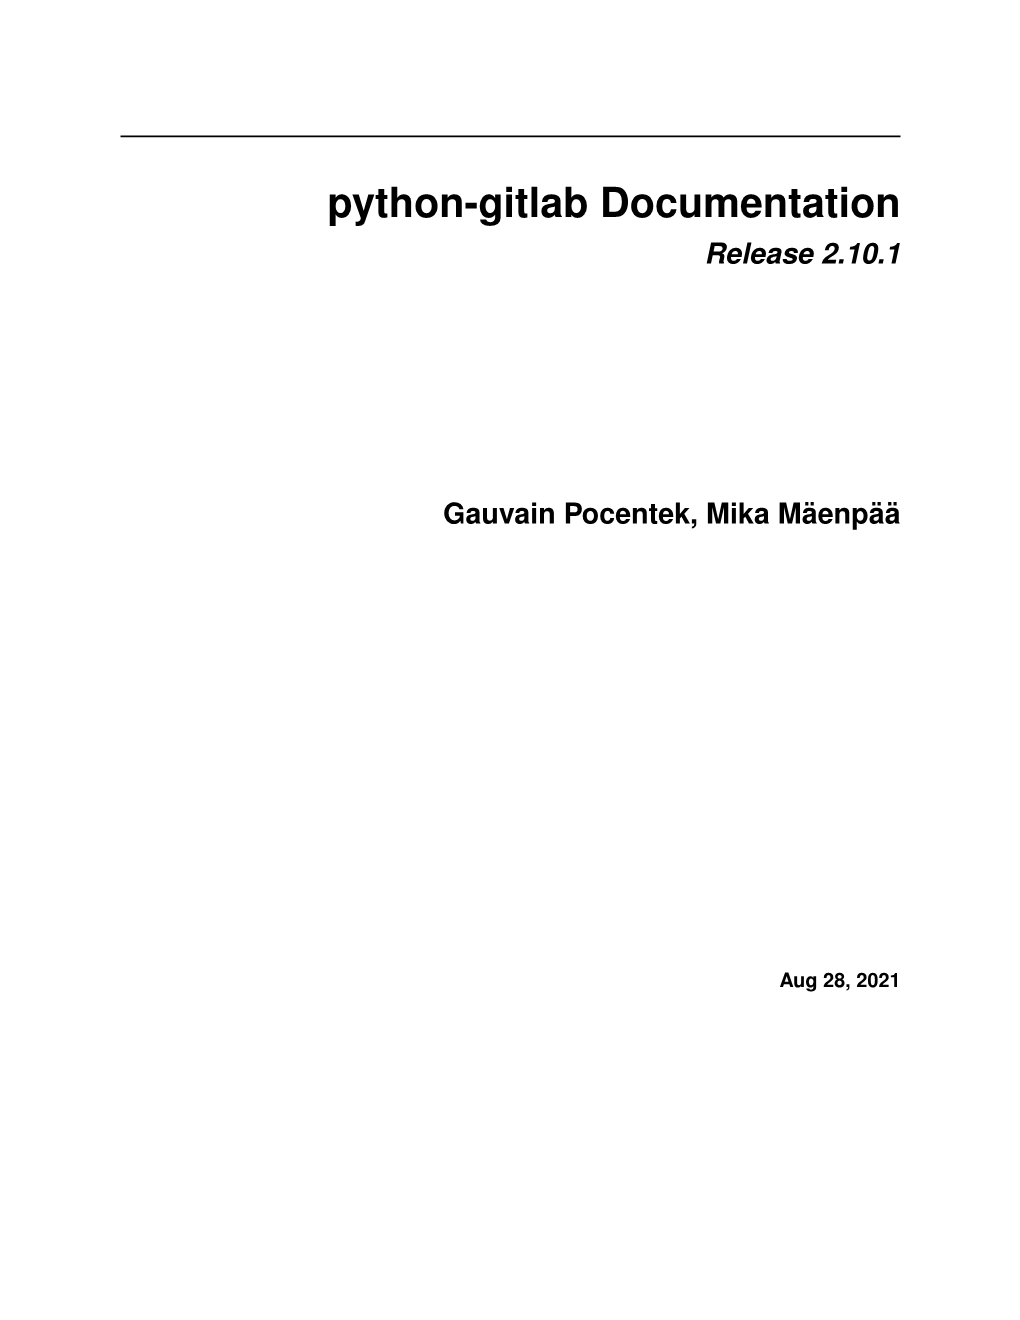 Python-Gitlab Documentation Release 2.10.1